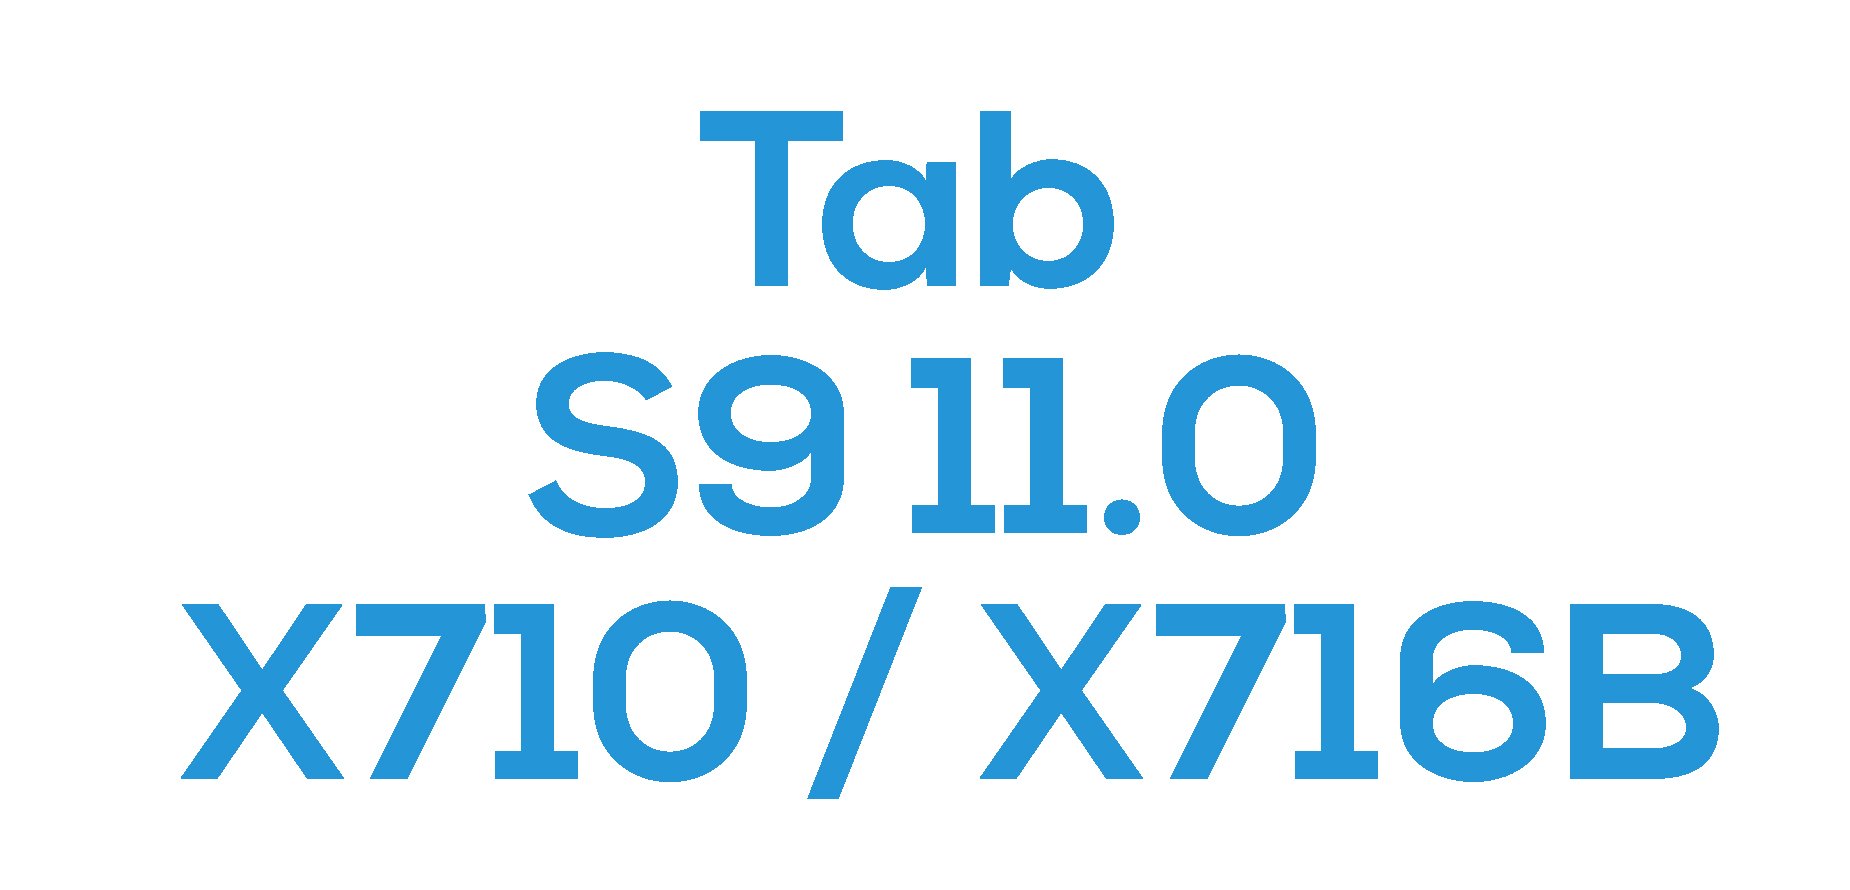 Tab S9 11.0" (X710, X716B)